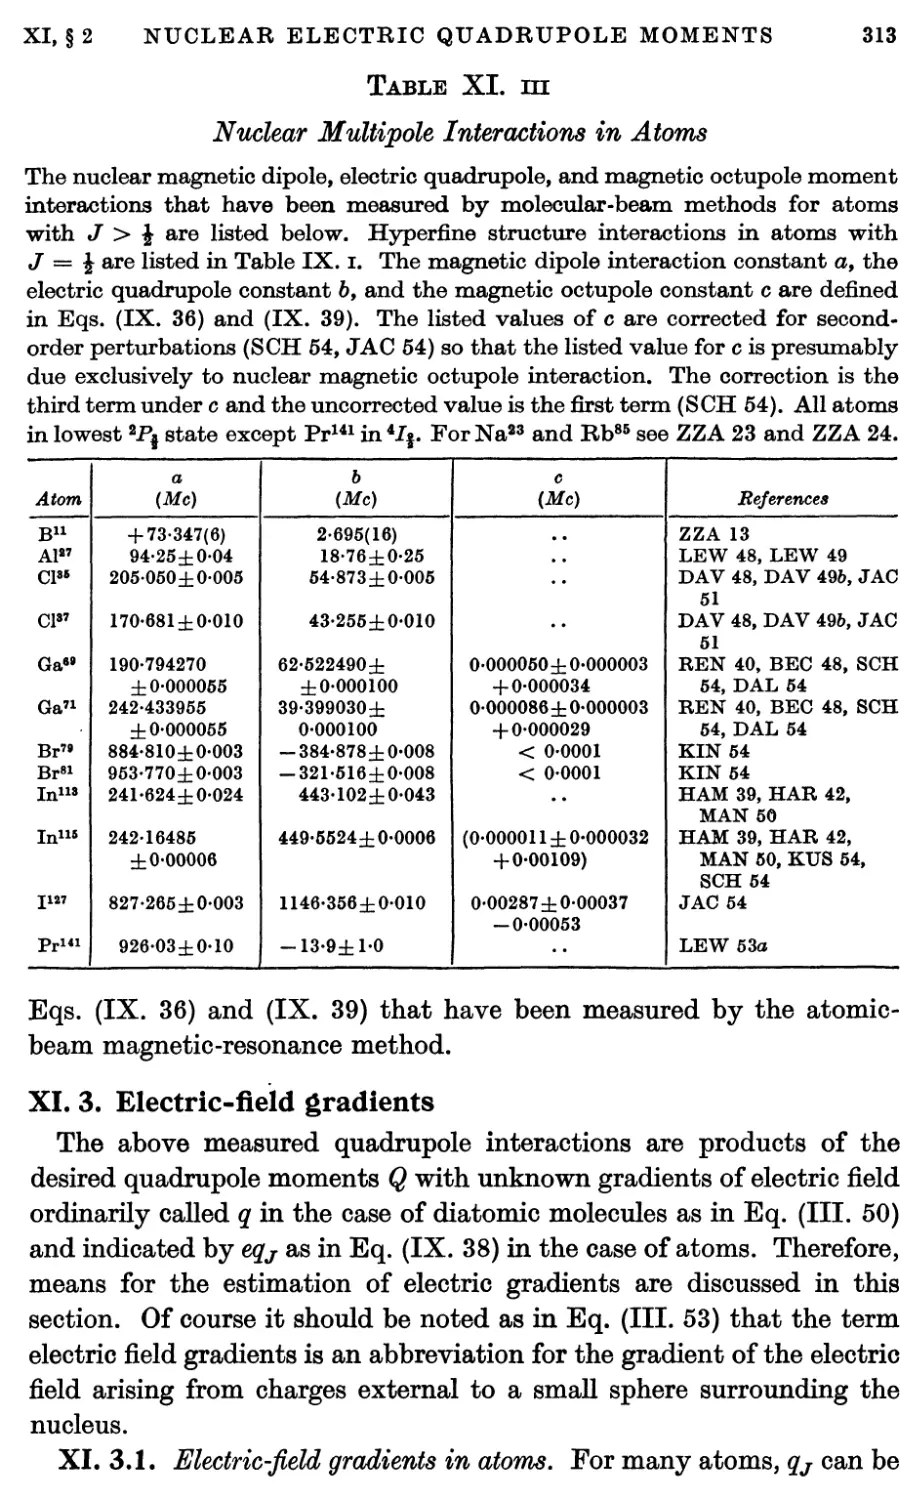 XI.3. Electric-field Gradients